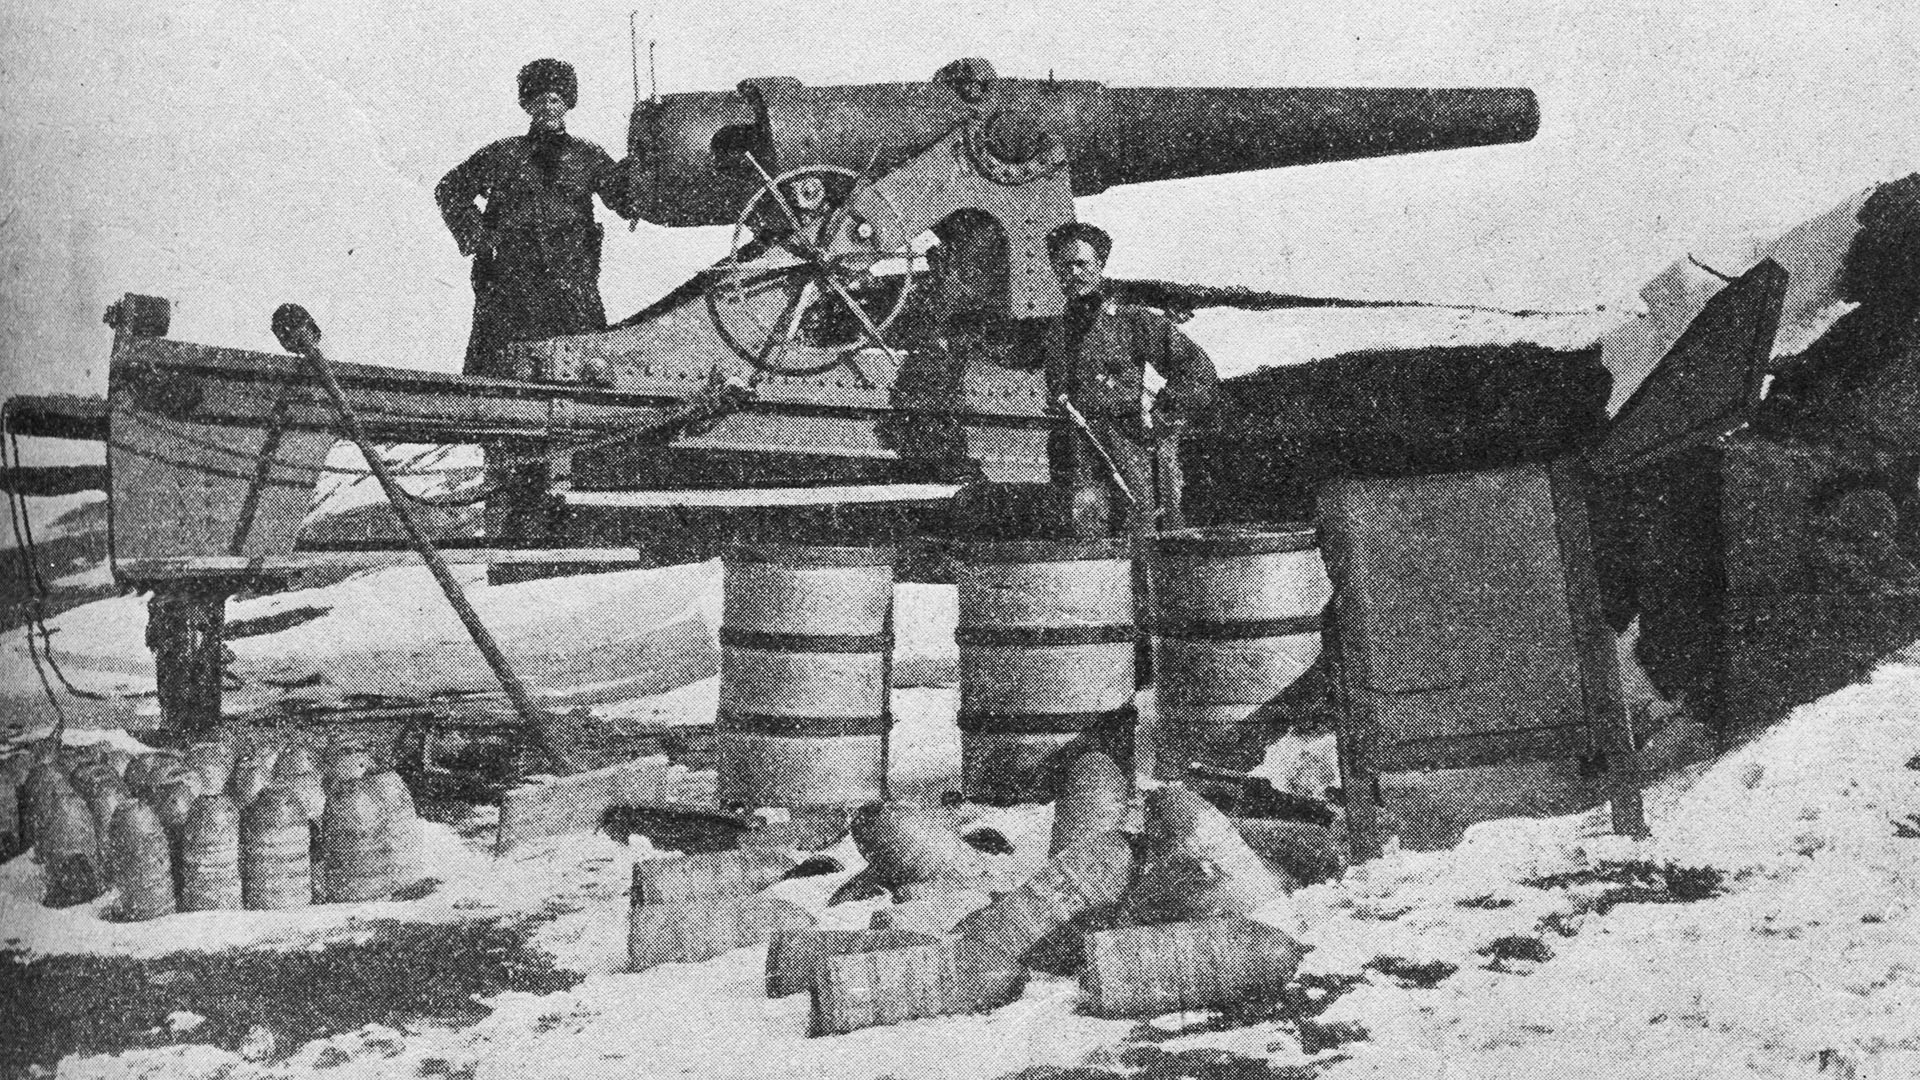 The Turkish artillery gun, captured by Russians in Erzurum.